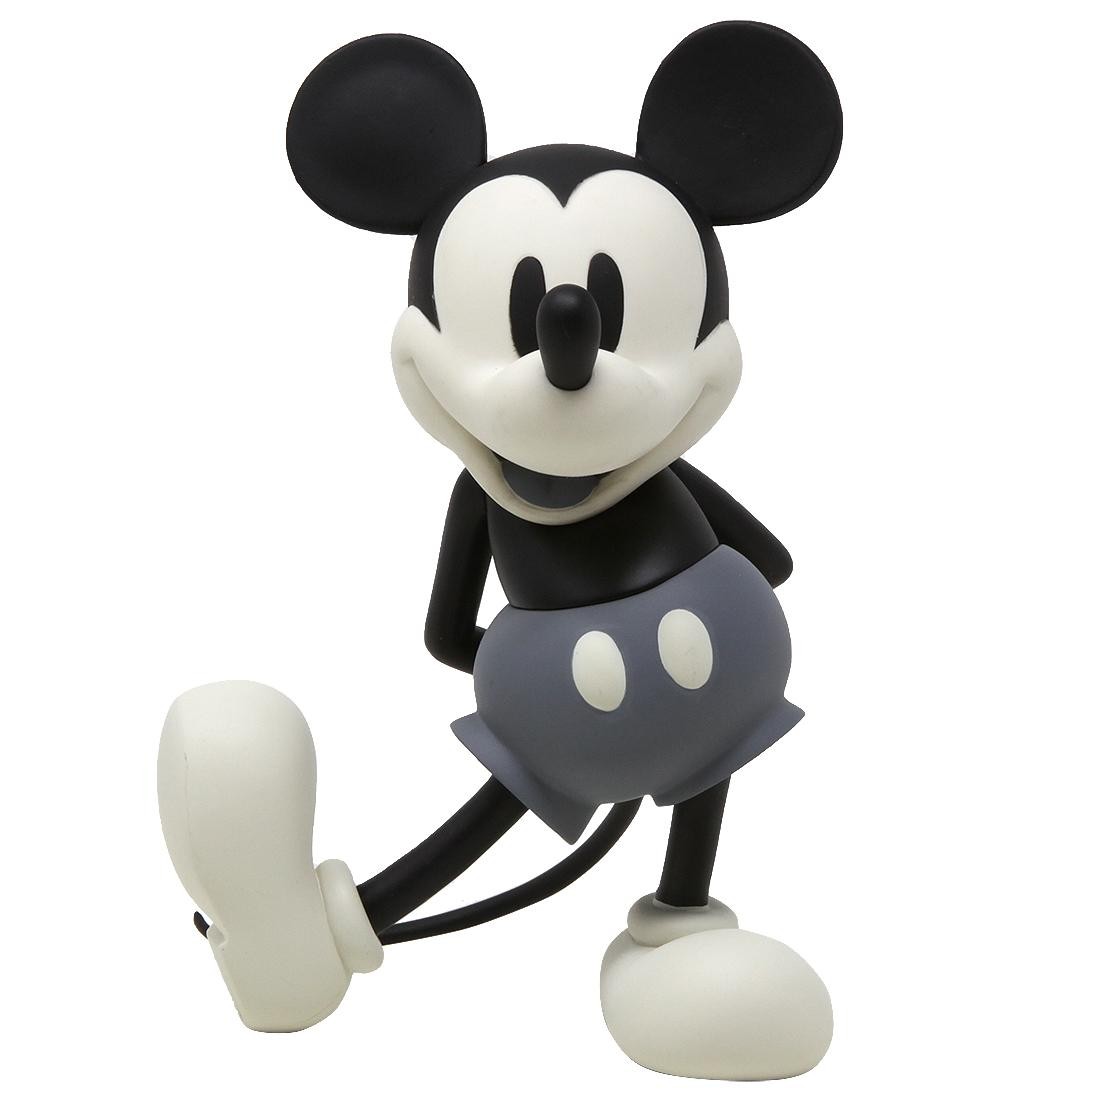 Medicom VCD Mickey Mouse Standard B&W ver. Figure black